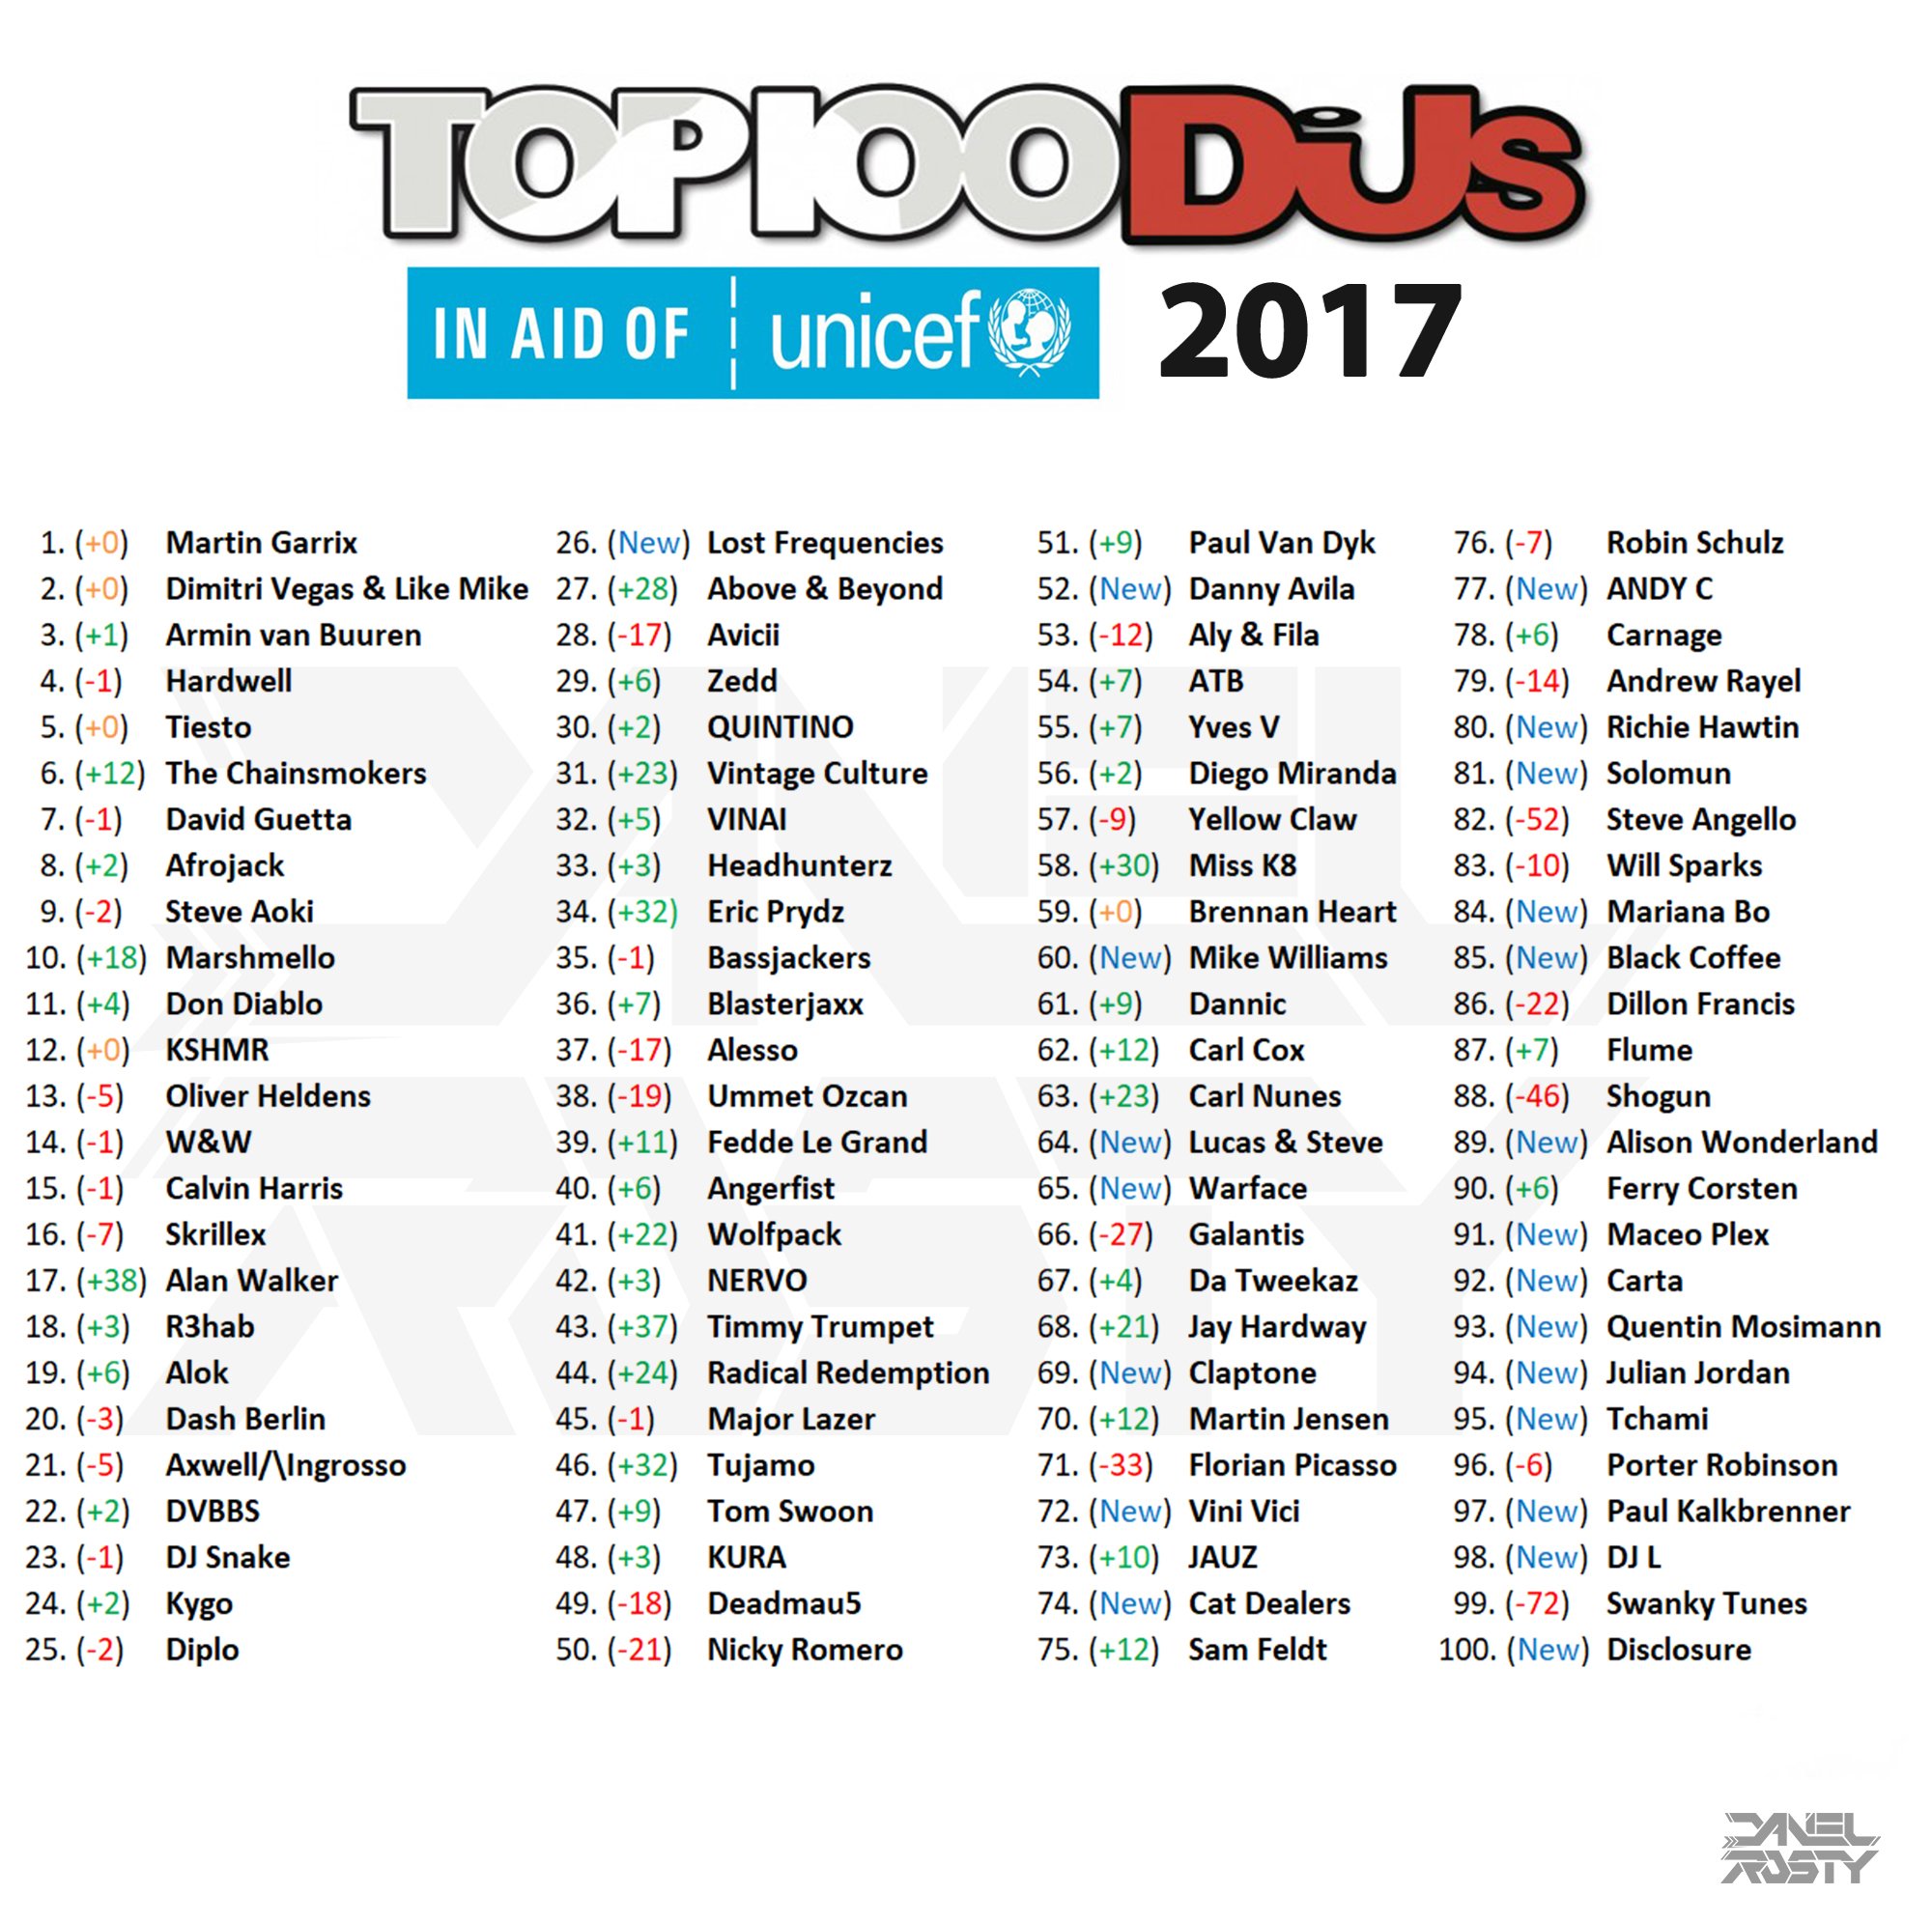 Blaze jeg læser en bog Kritisk Daniel Rosty on Twitter: "DJ Mag Top 100 DJs 2017 - Results are out !!!  https://t.co/8x3ZMeQPSn" / Twitter